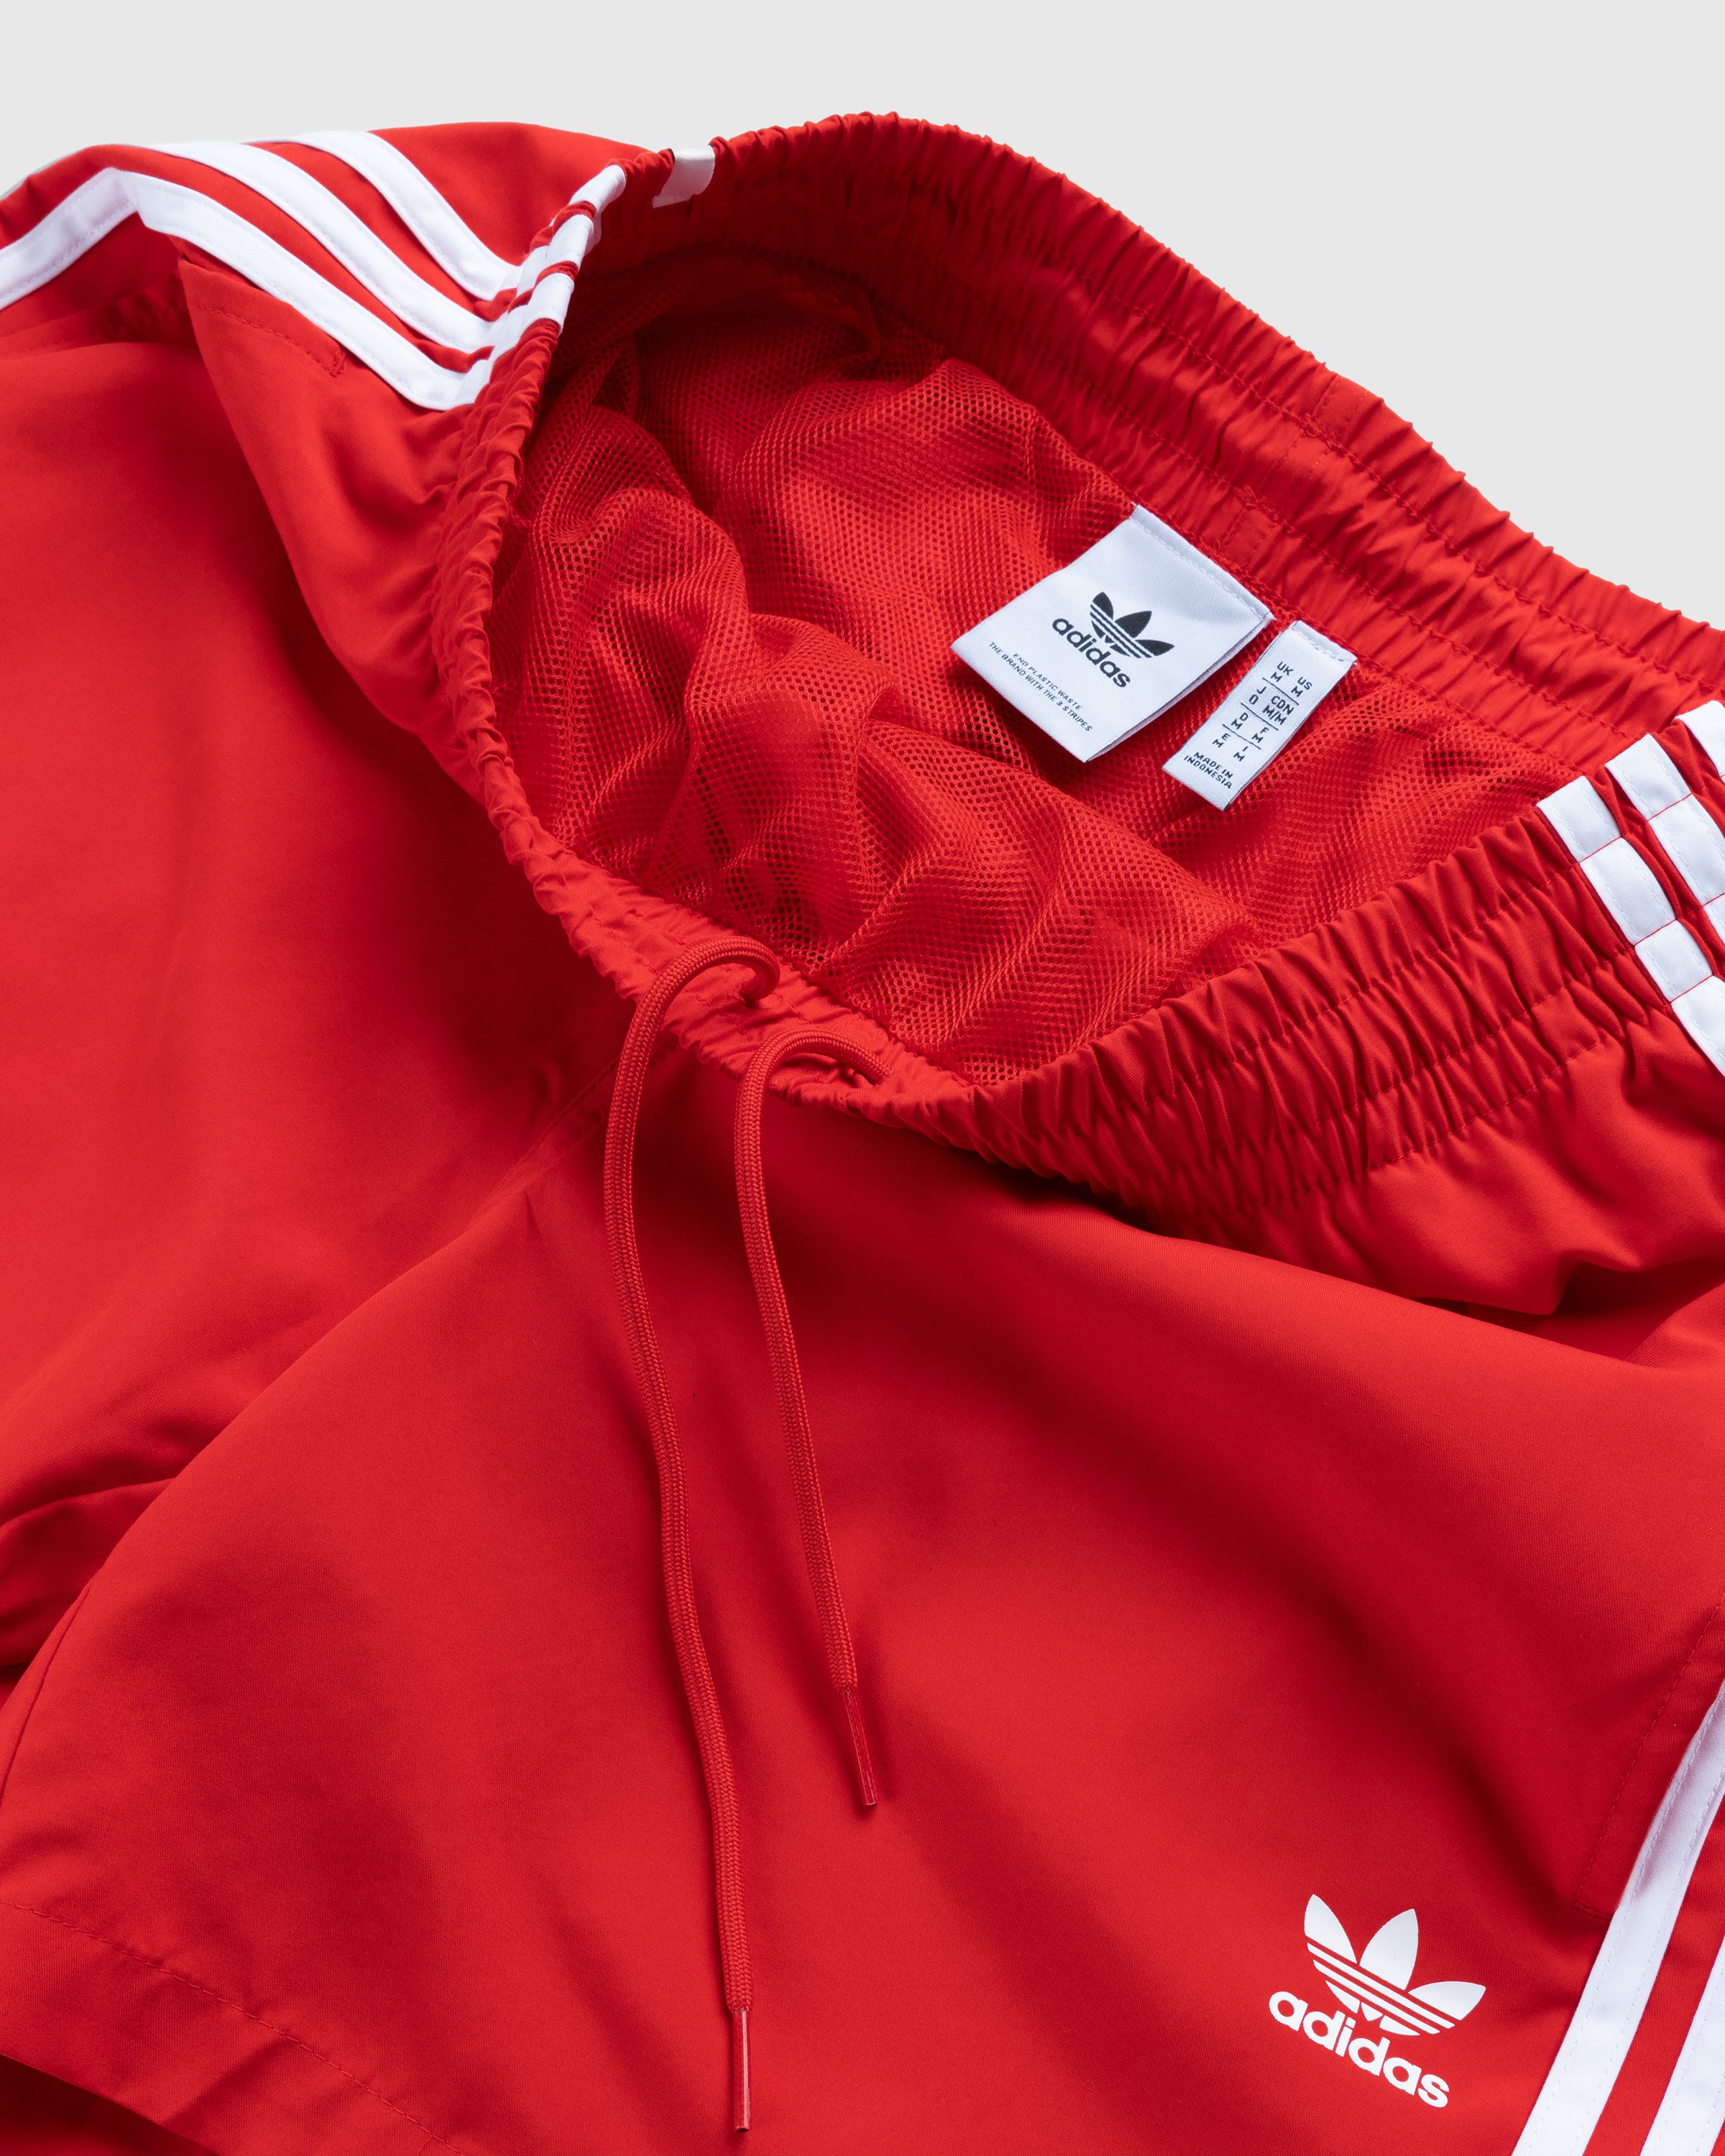 Adidas - Classic 3-Stripes Swim Shorts Vivid Red - Clothing - Red - Image 6